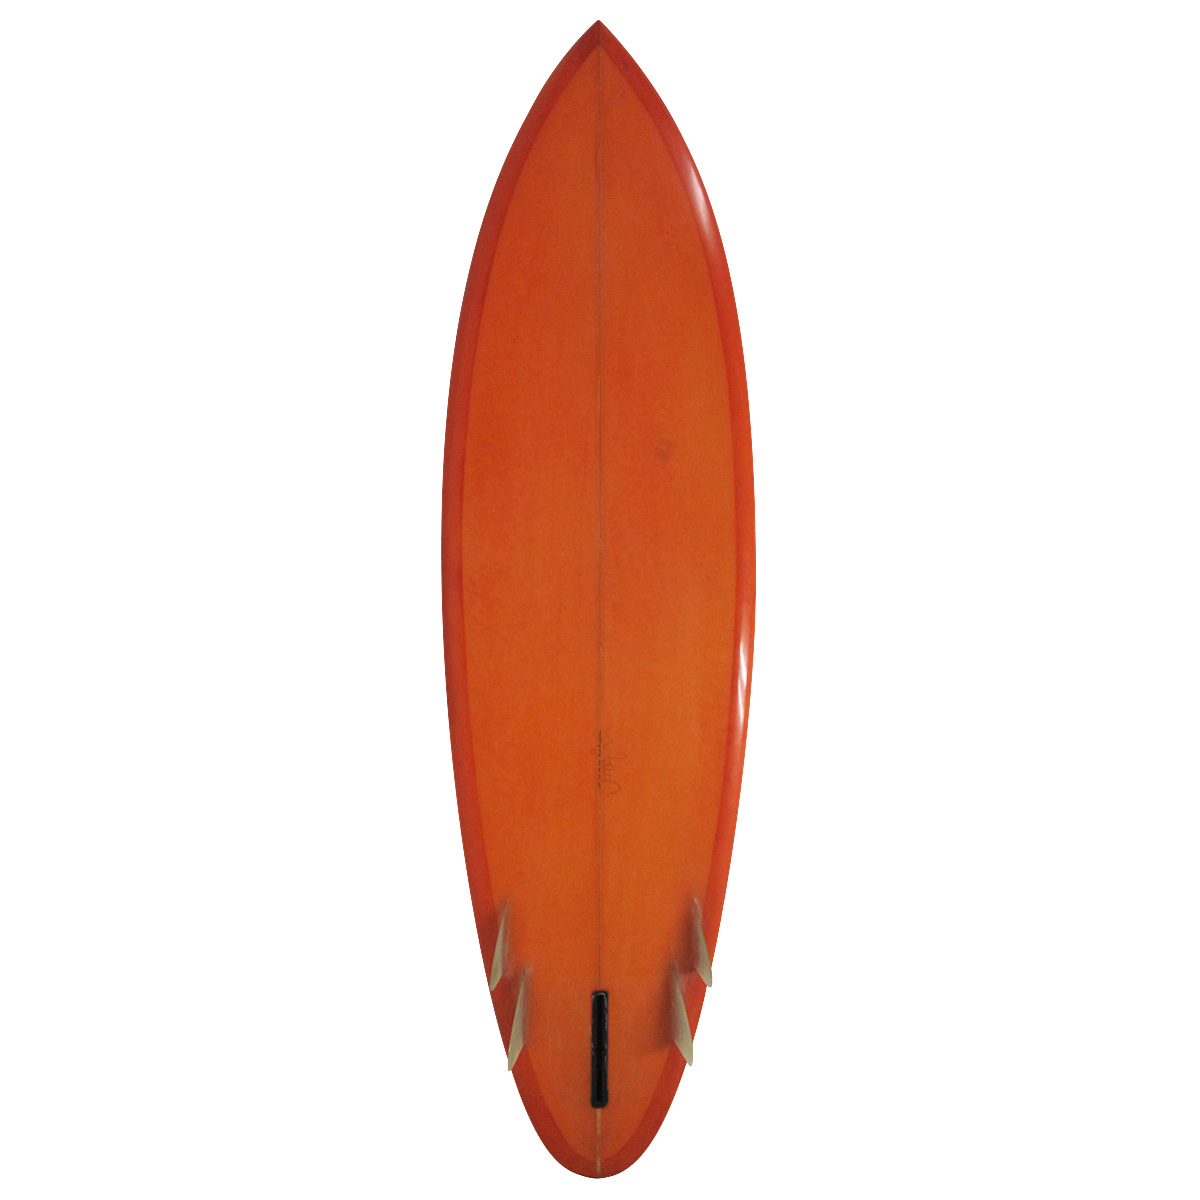 Mccallum Surfboards / Personal Bonzer 6'5 Shaped By Jeff Mccallum